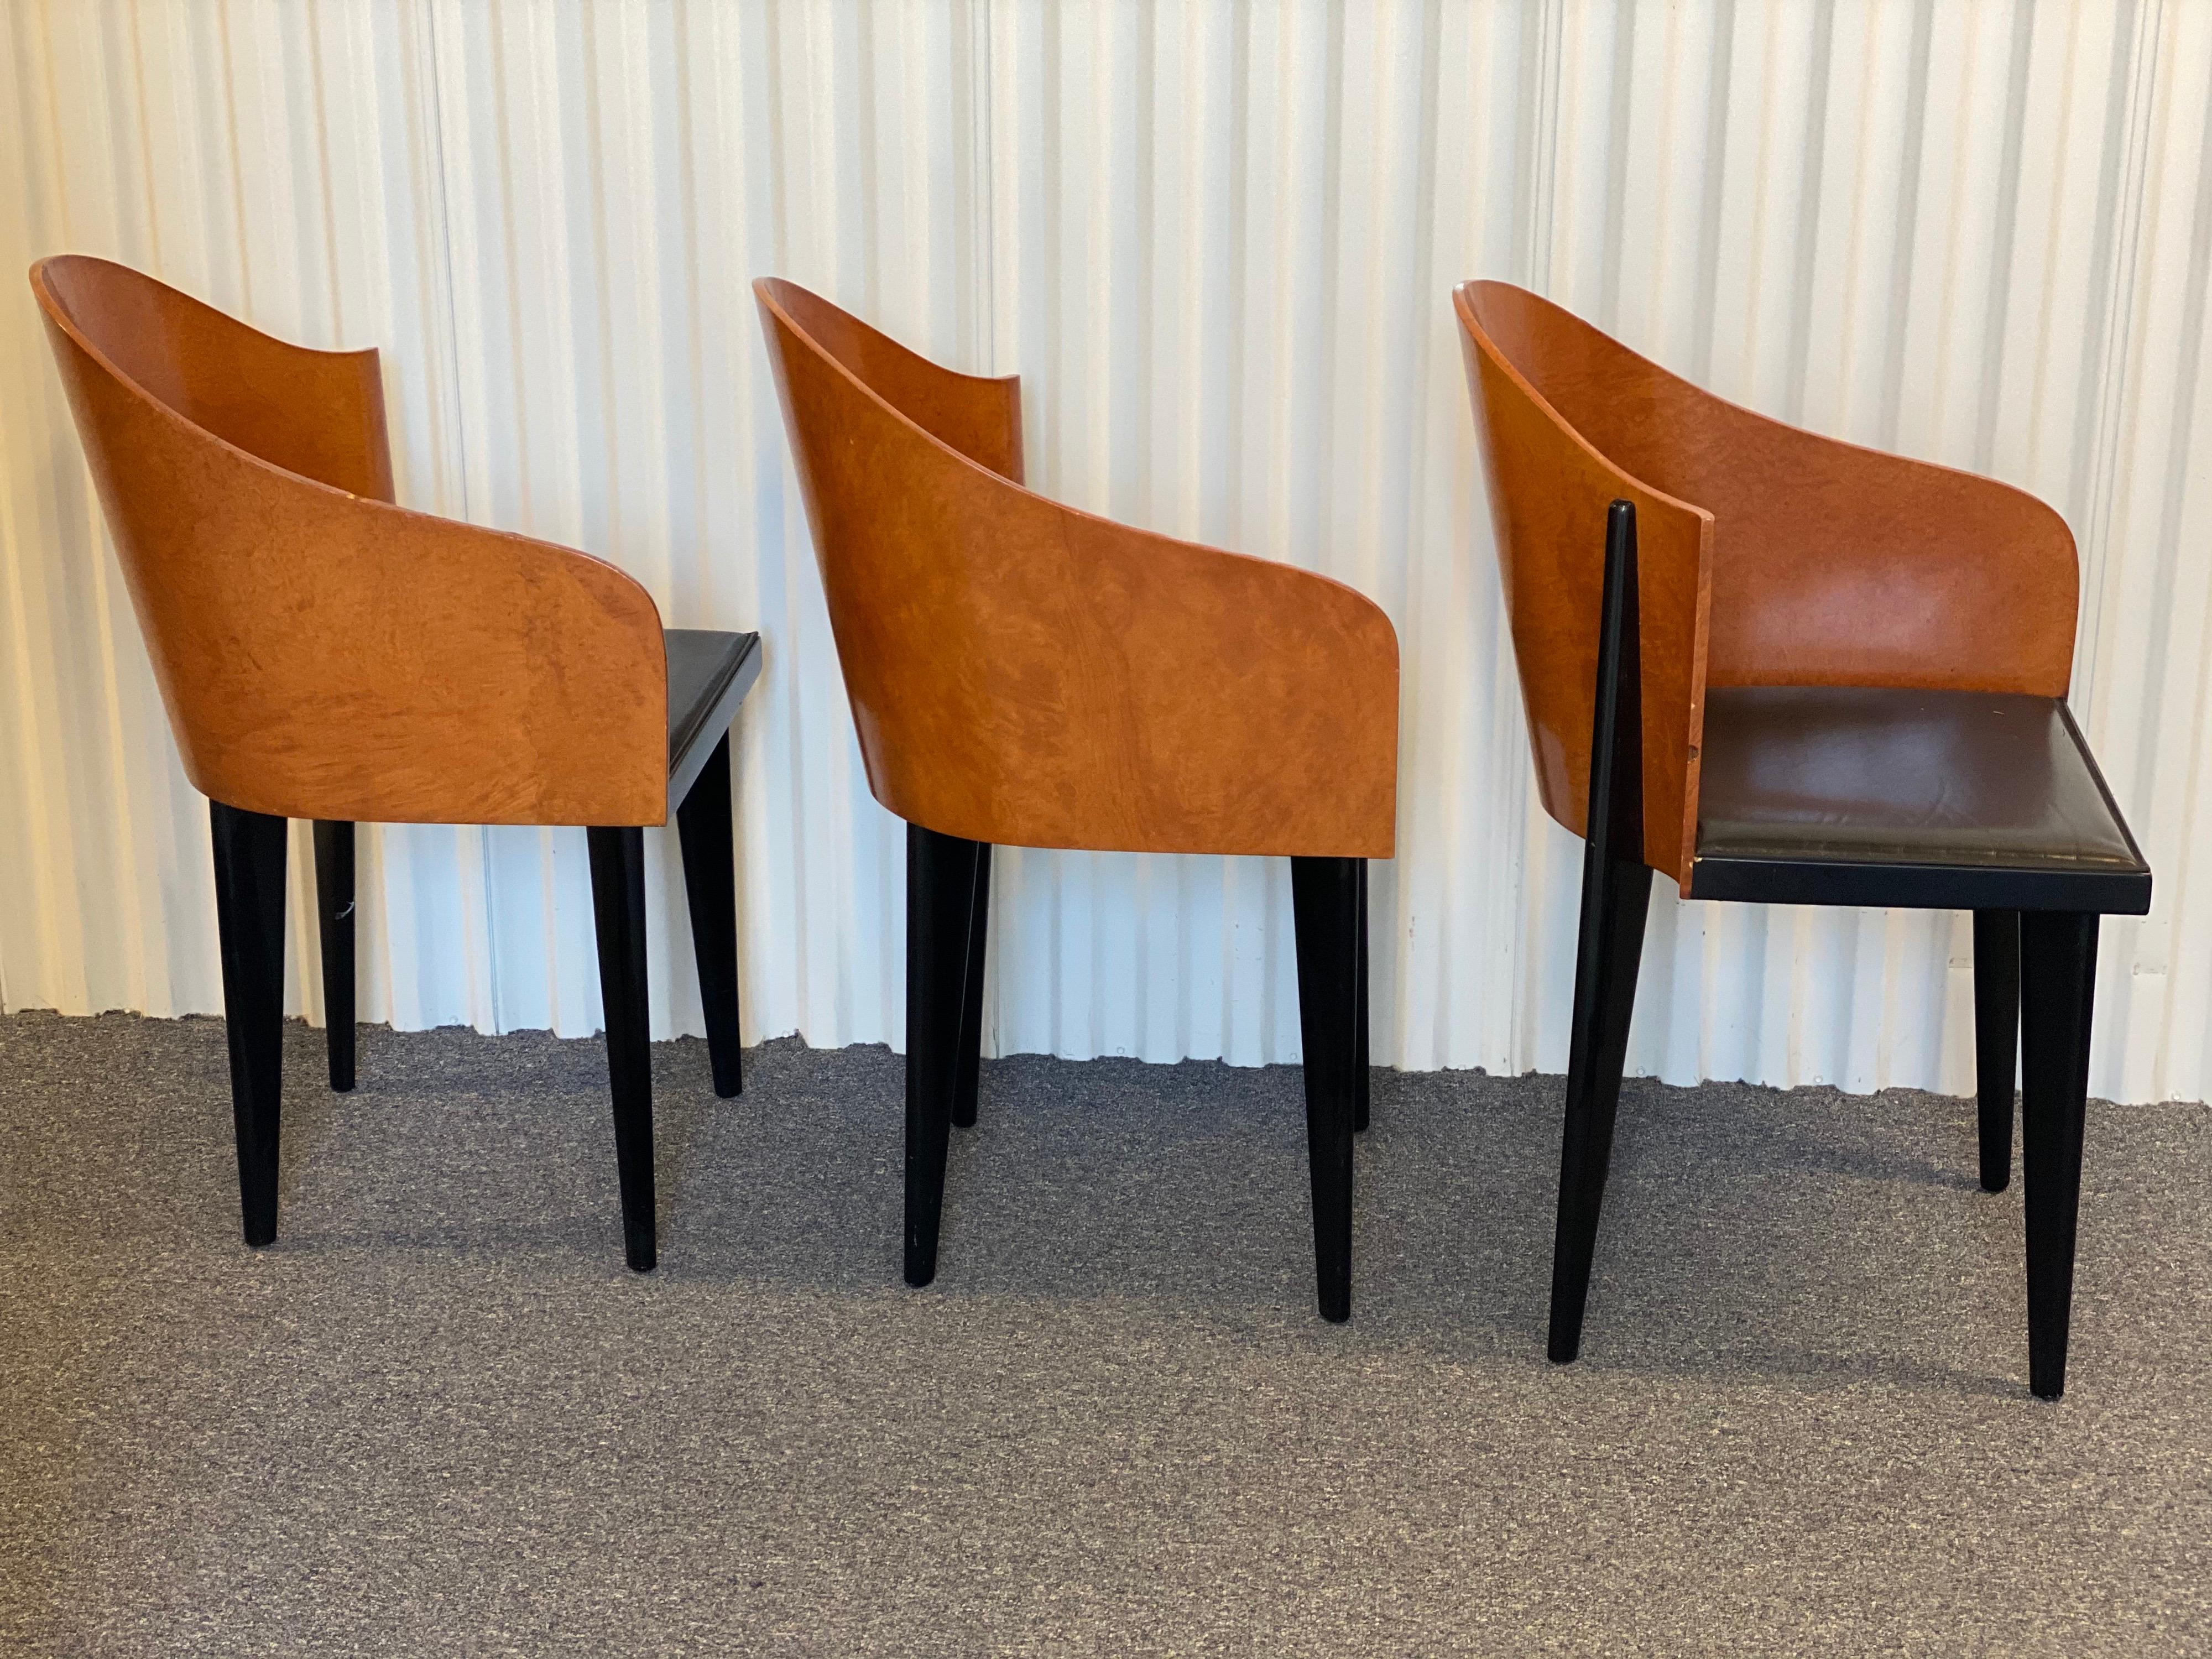 Late 20th Century Set of Three Toscana Chairs Designed by Piero Sartogo for Saporiti